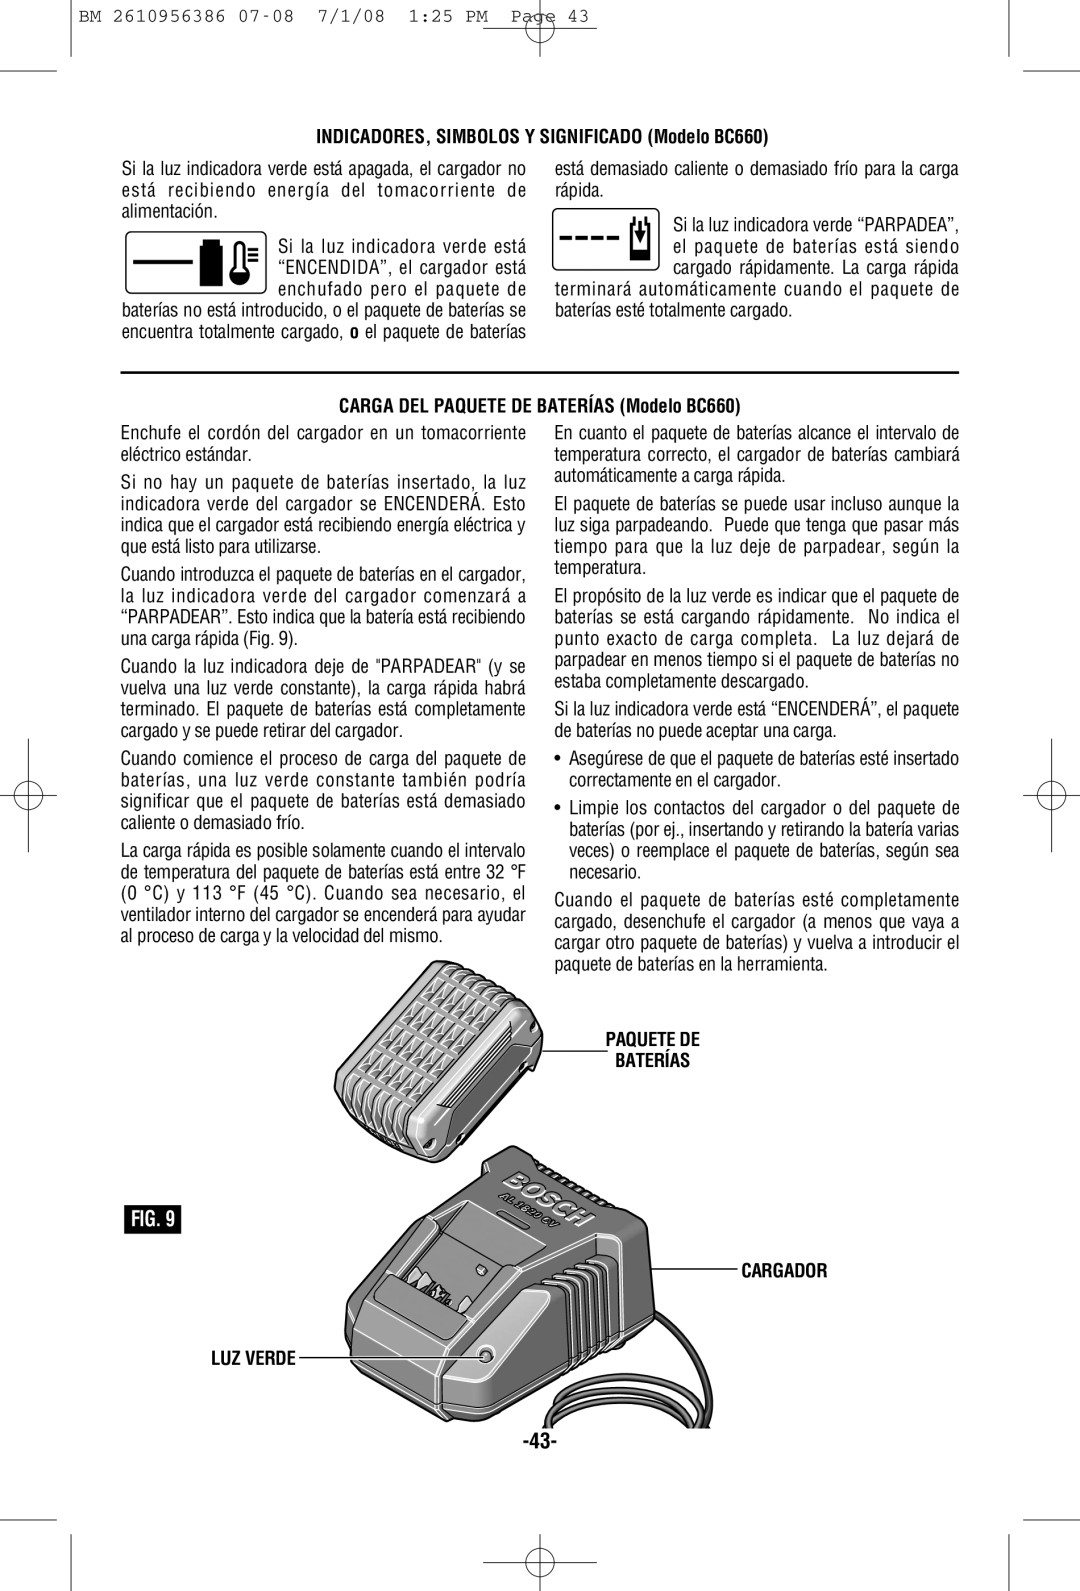 Bosch Power Tools 36618 manual INDICADORES, Simbolos Y Significado Modelo BC660, Carga DEL Paquete DE Baterías Modelo BC660 